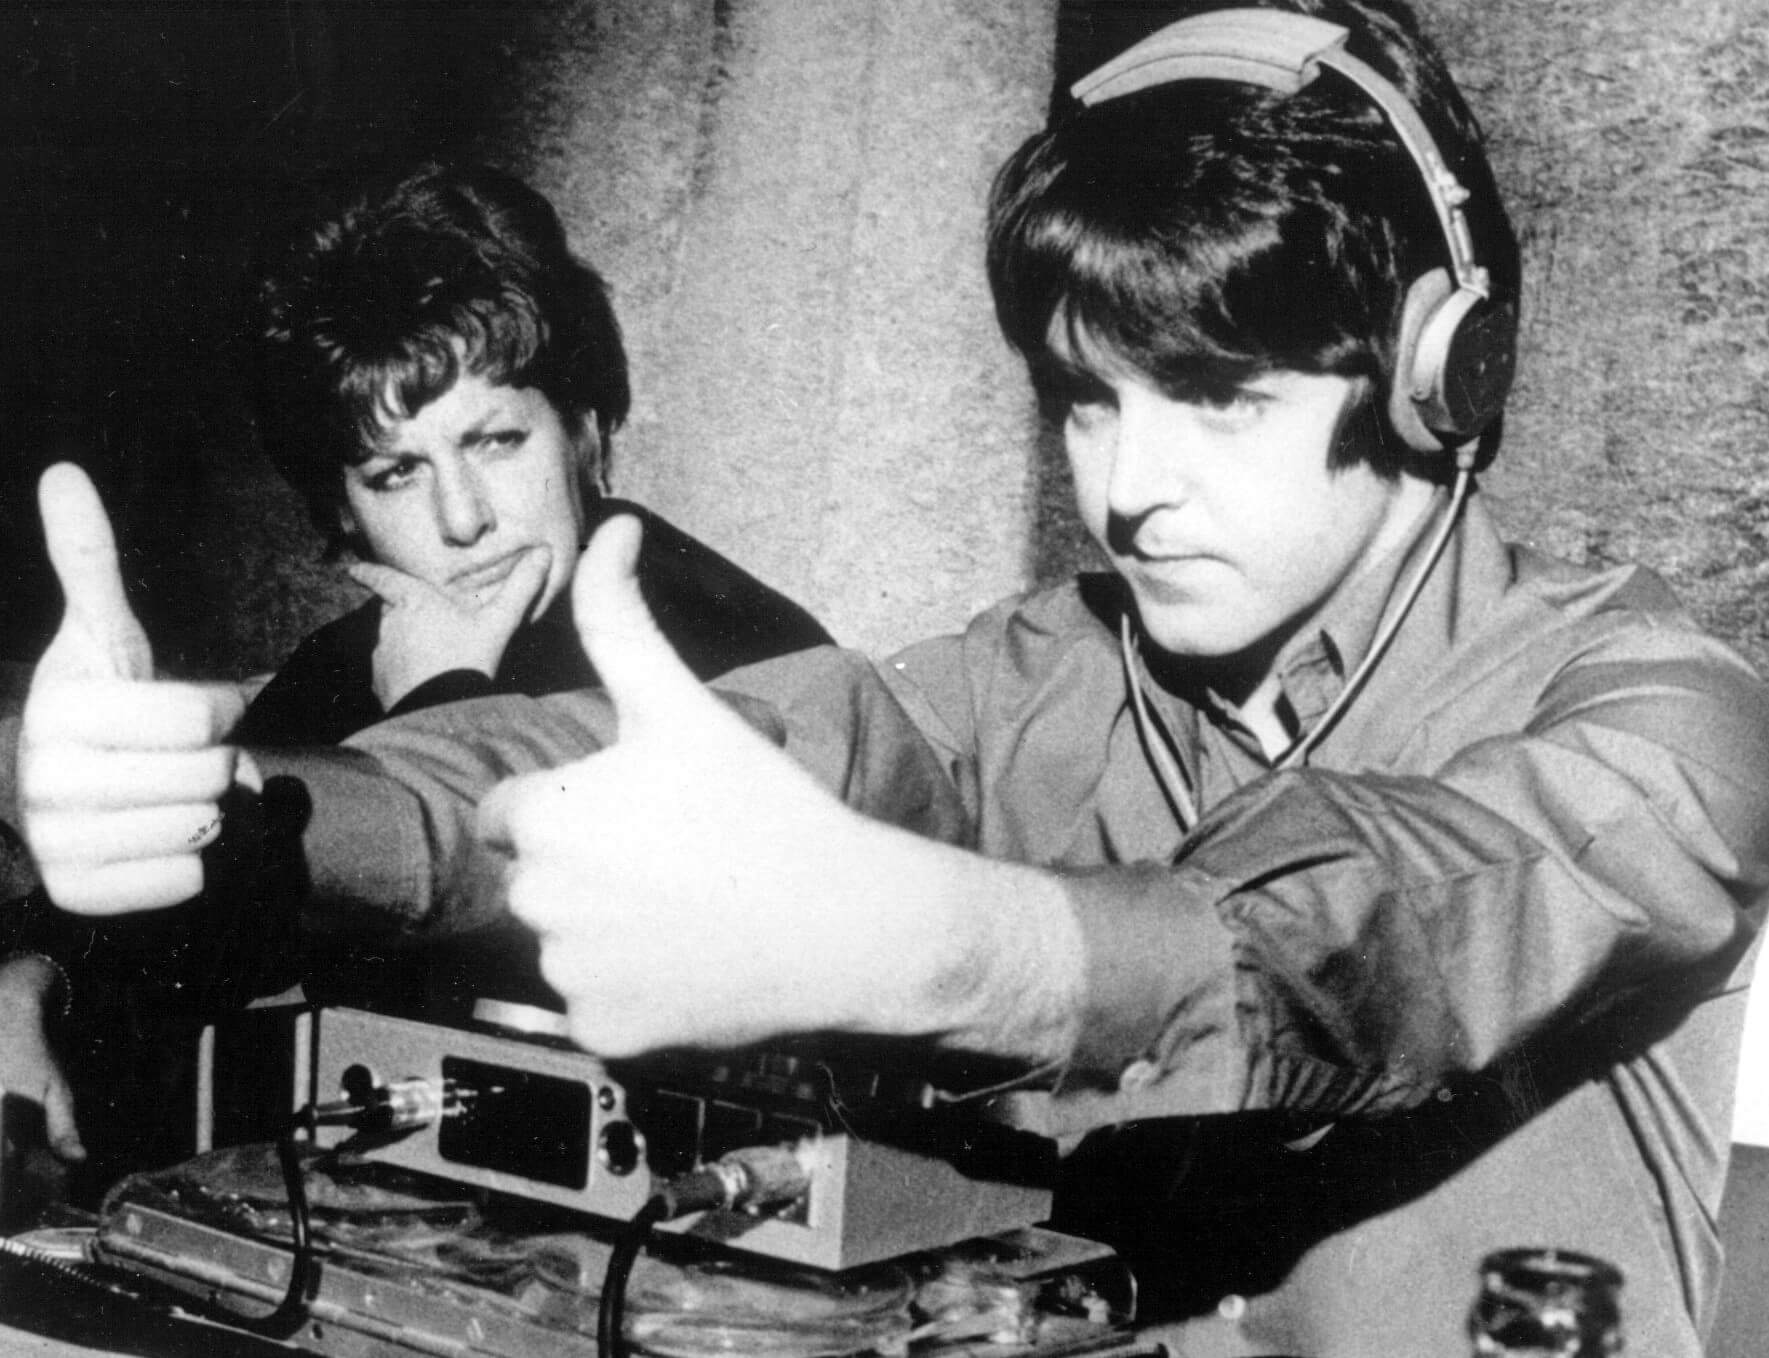 The Beatles' Paul McCartney wearing headphones